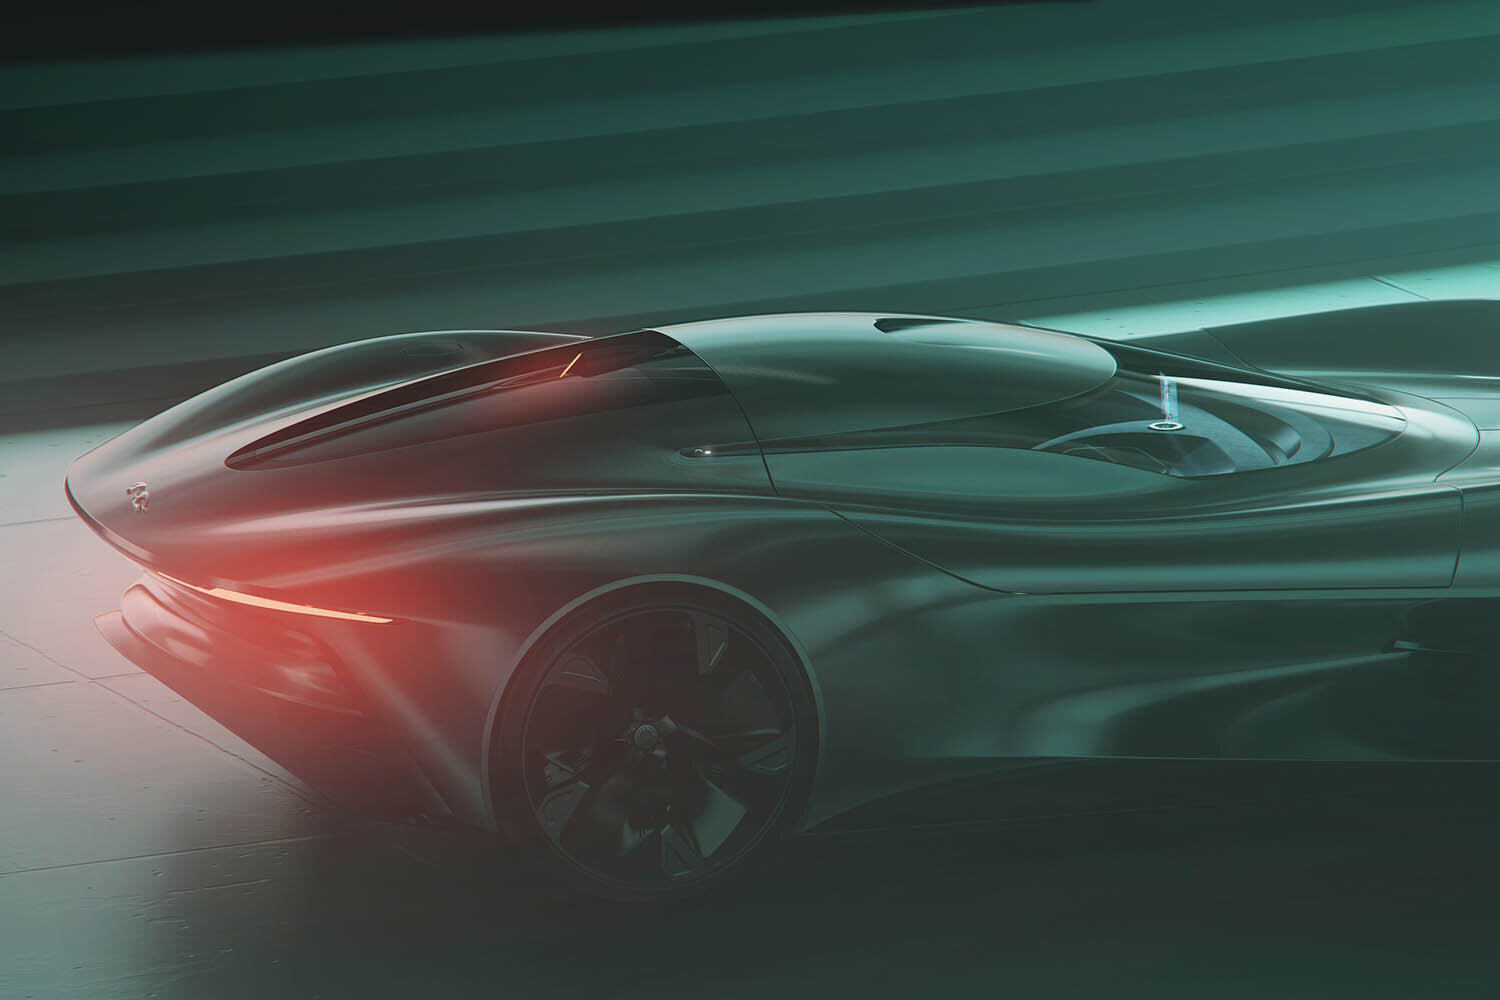 Jaguar_Vision_Gran_Turismo_Coupé_Exterior_25.10.19_004.jpg